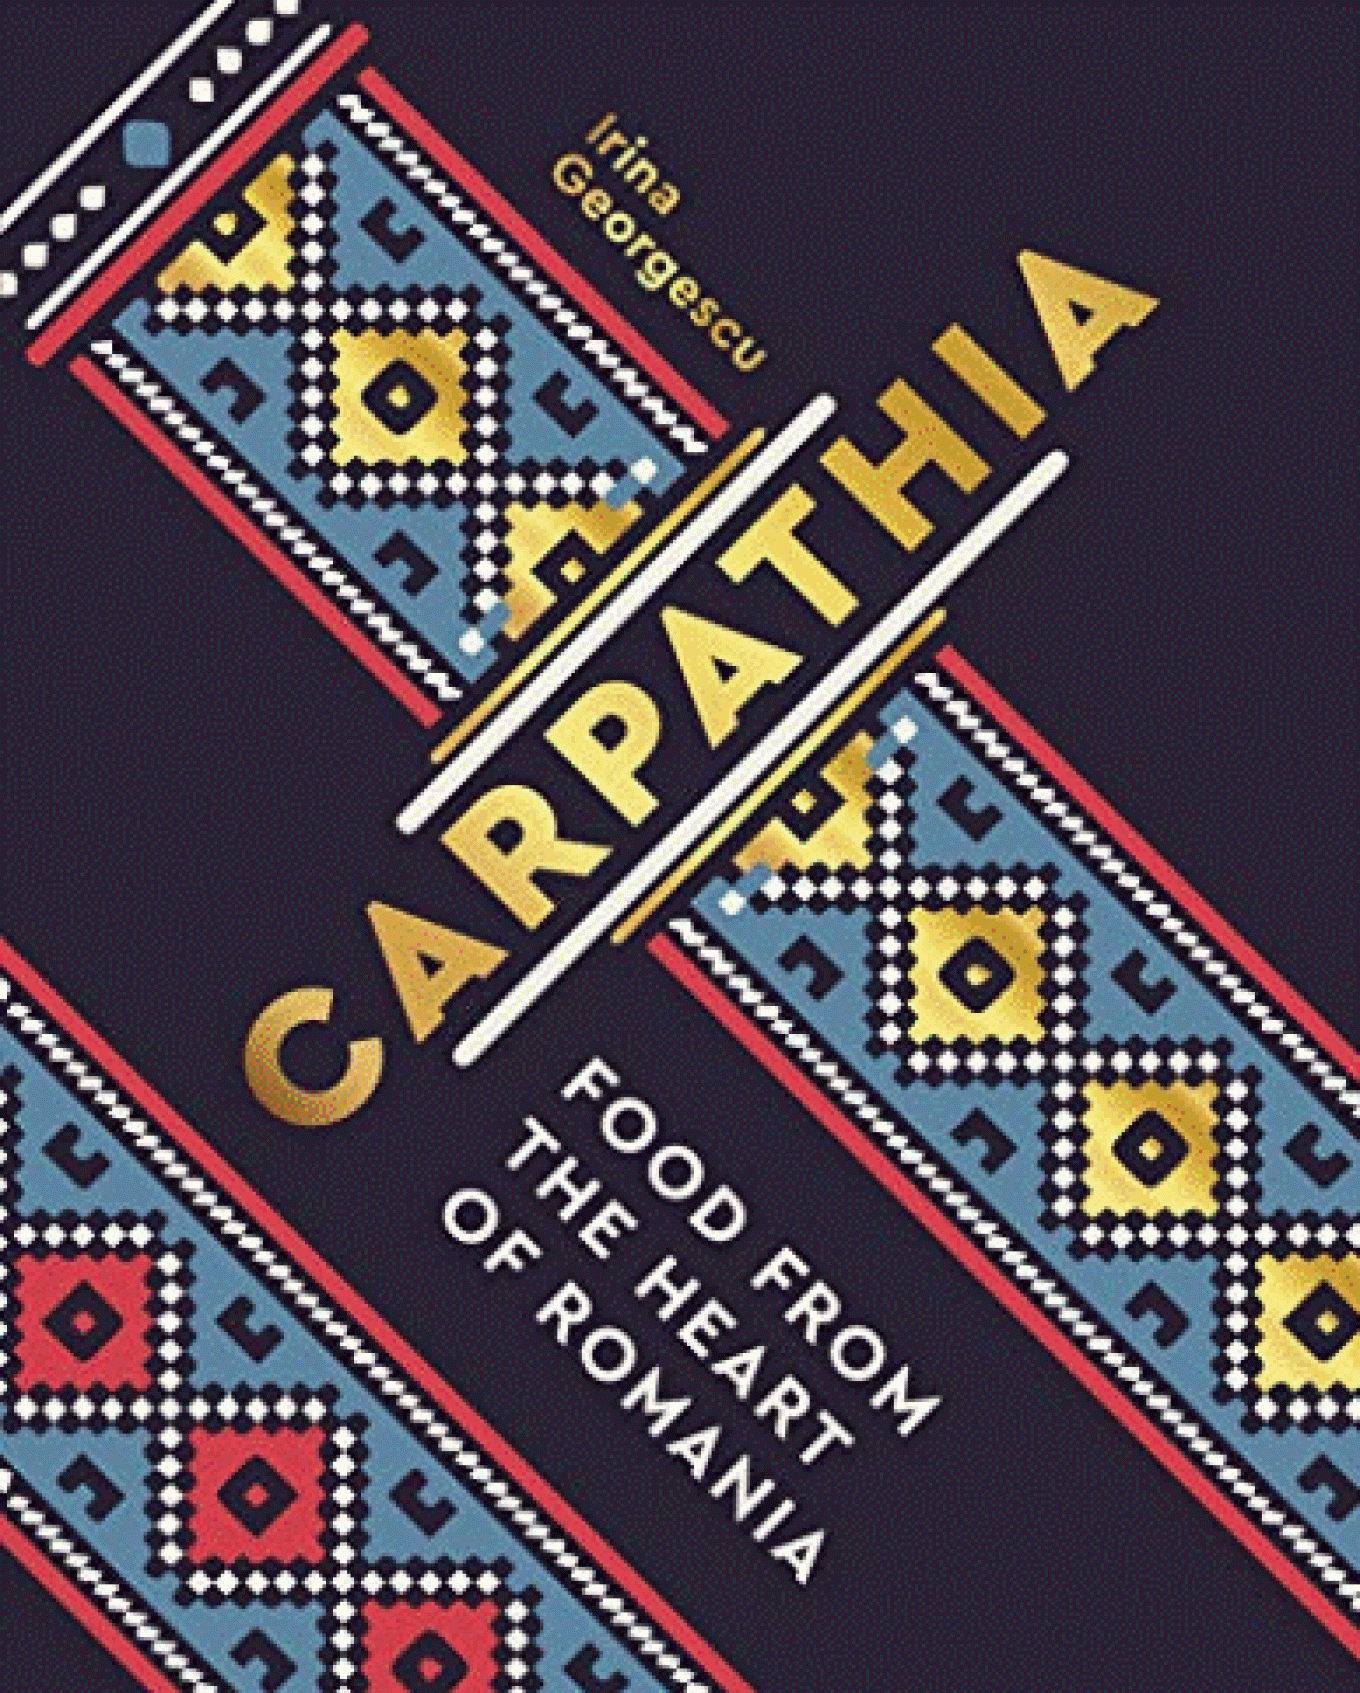 ‘Carpathia: Food From the Heart of Romania’